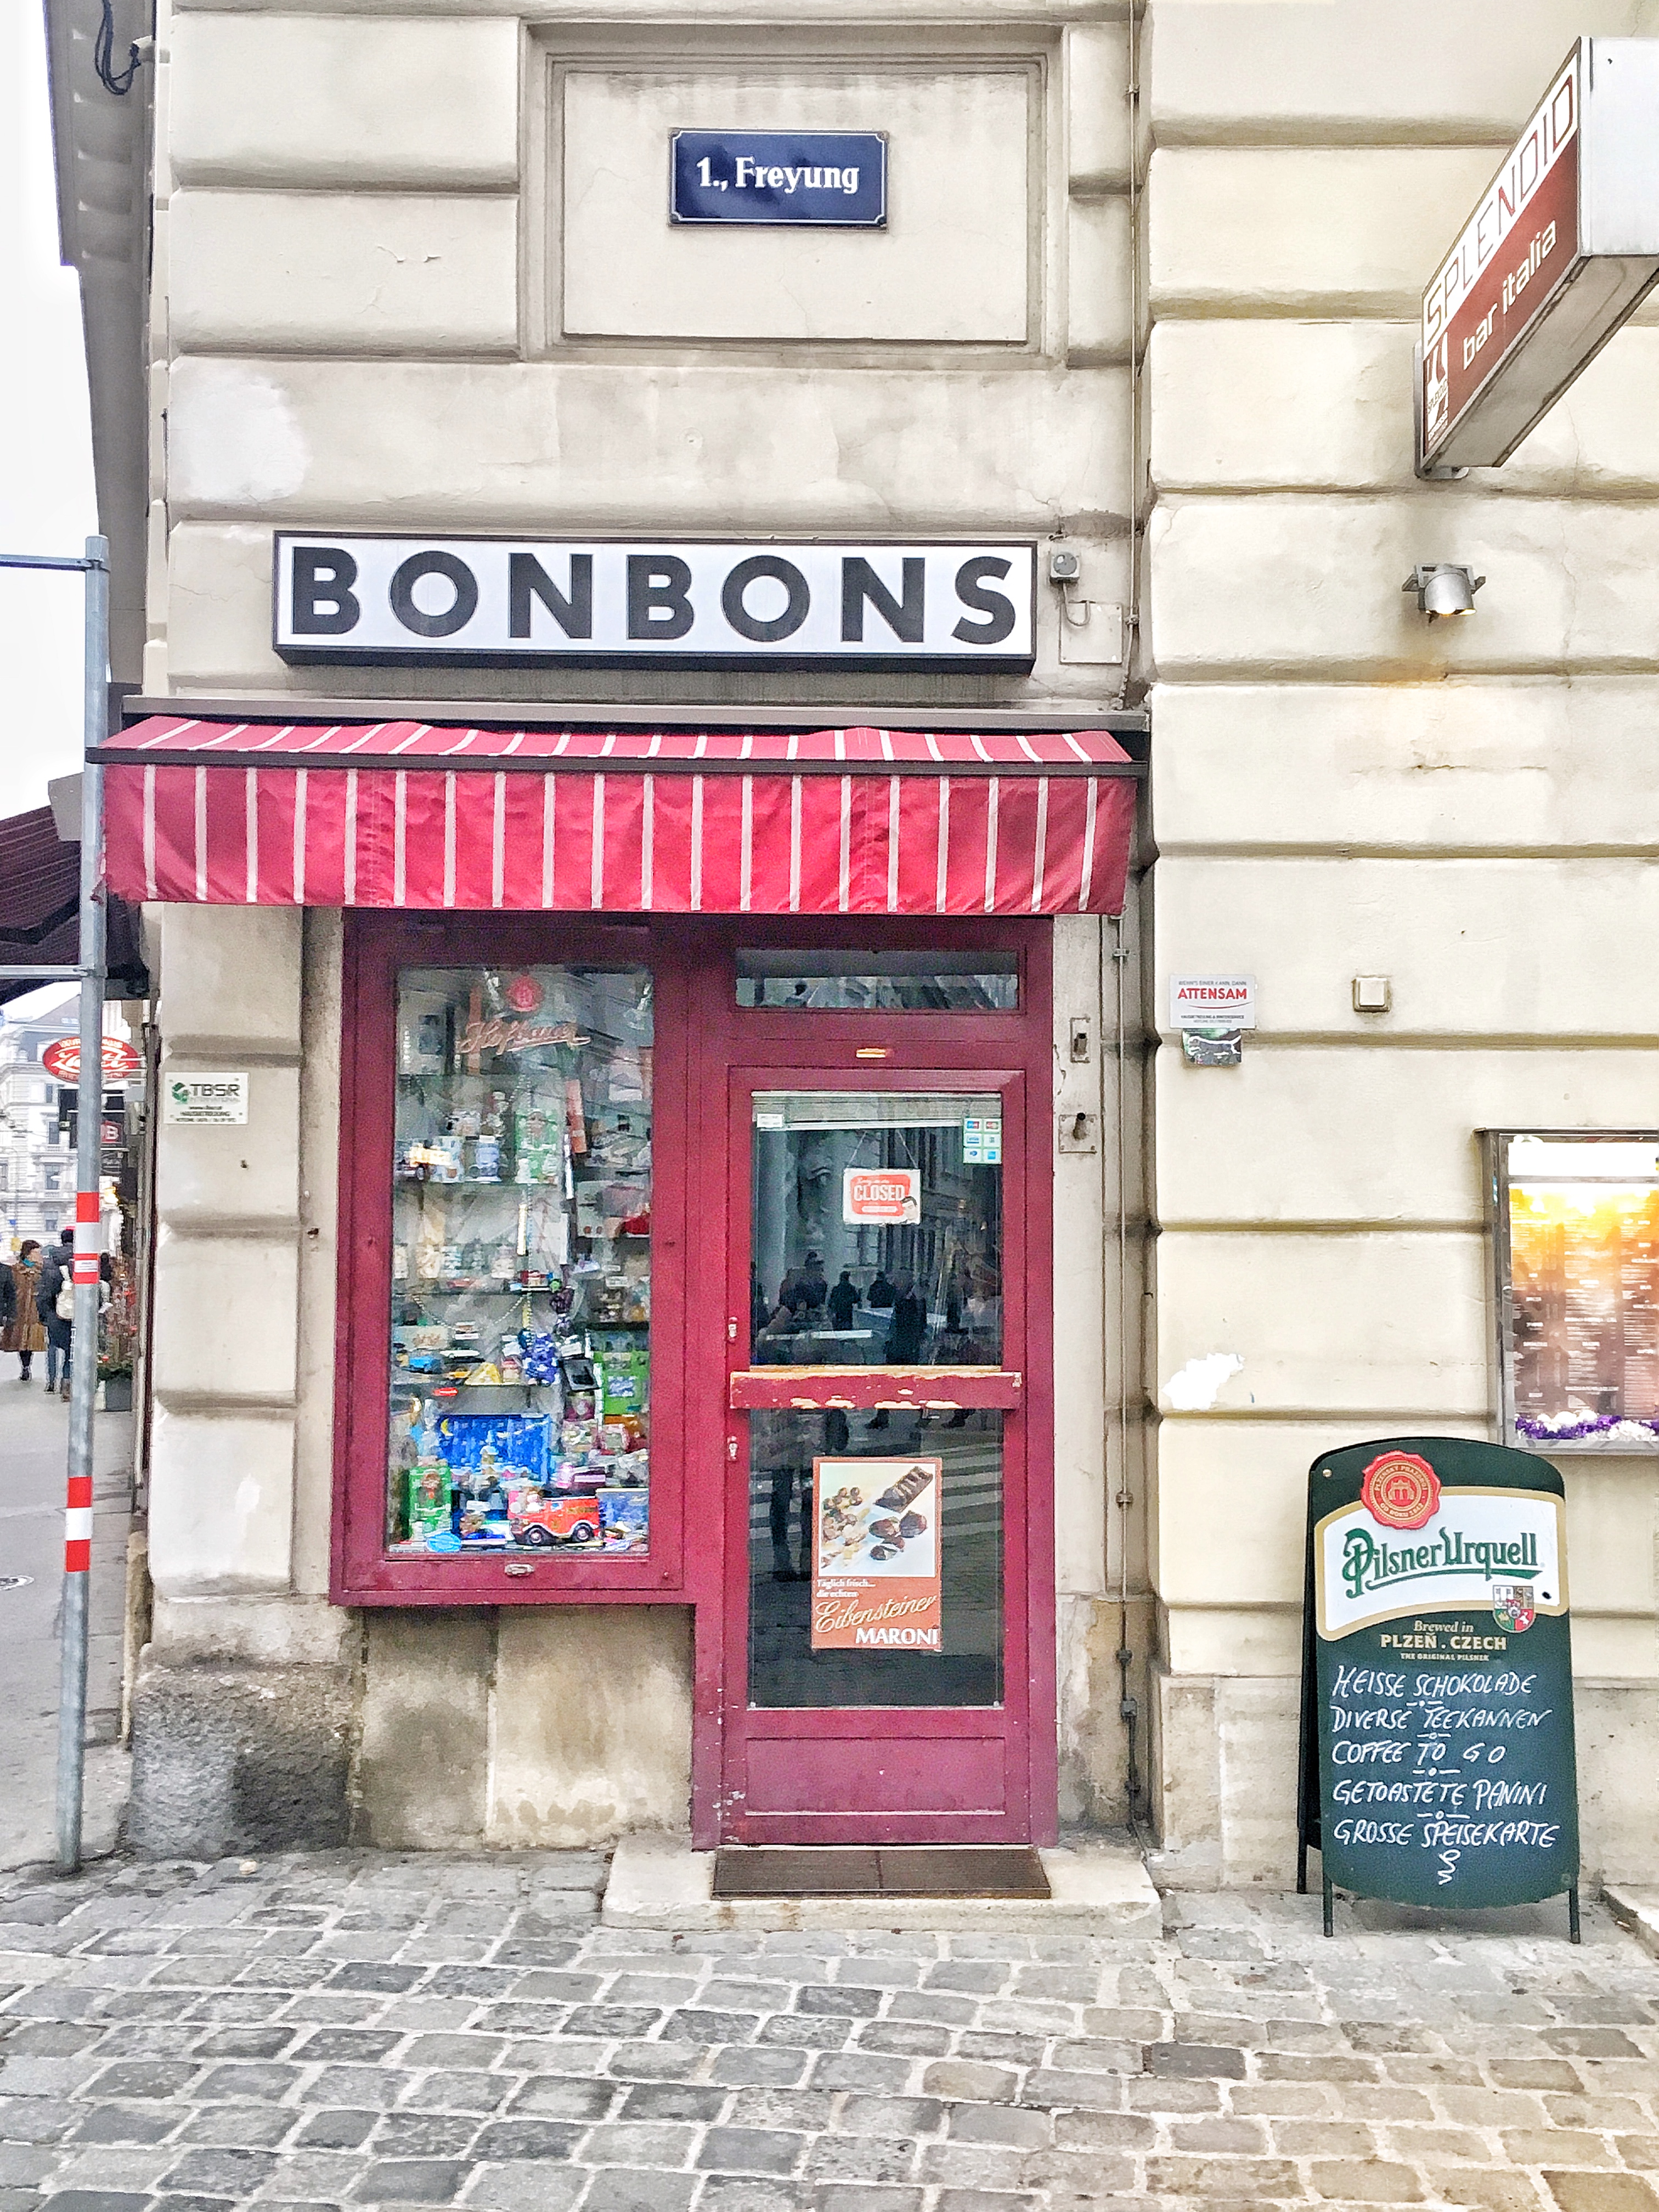 Bonbons store in Vienna